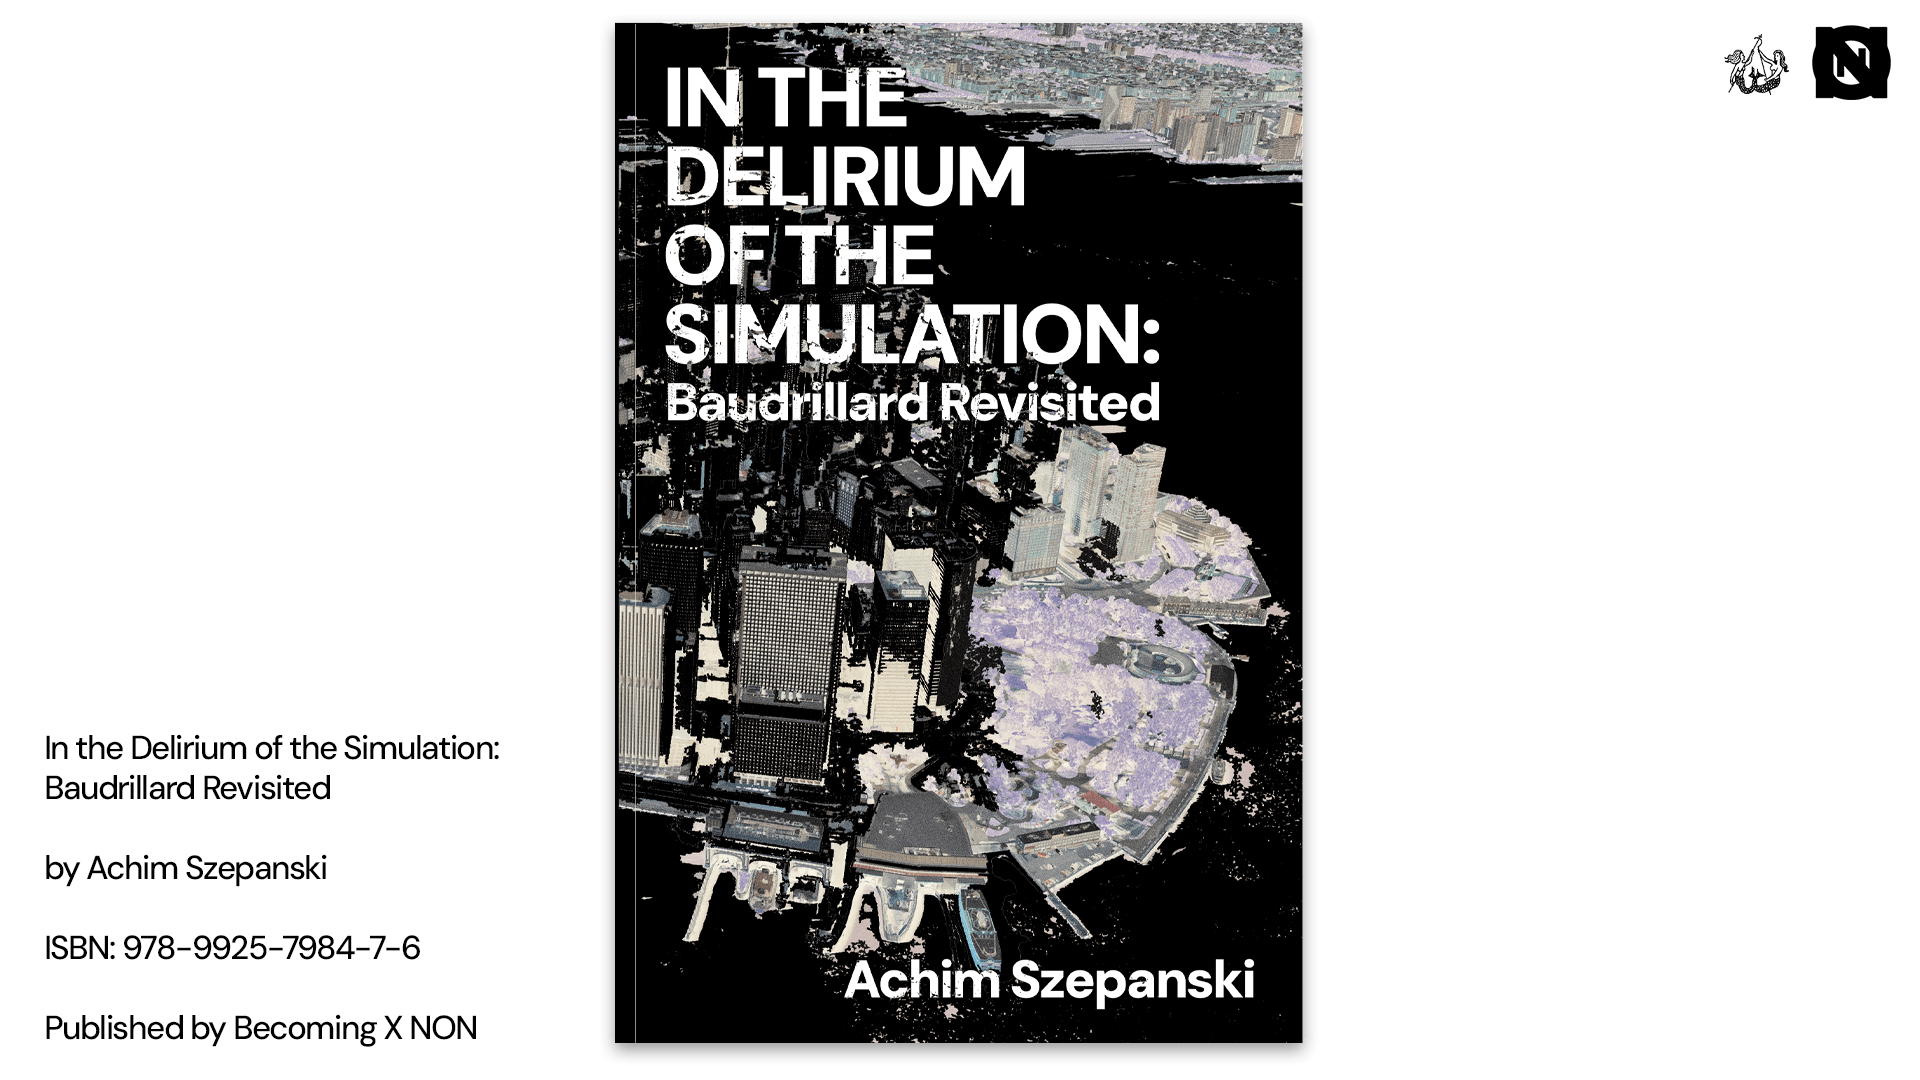 In the Delirium of the Simulation: Baudrillard Revisited by Achim Szepanski